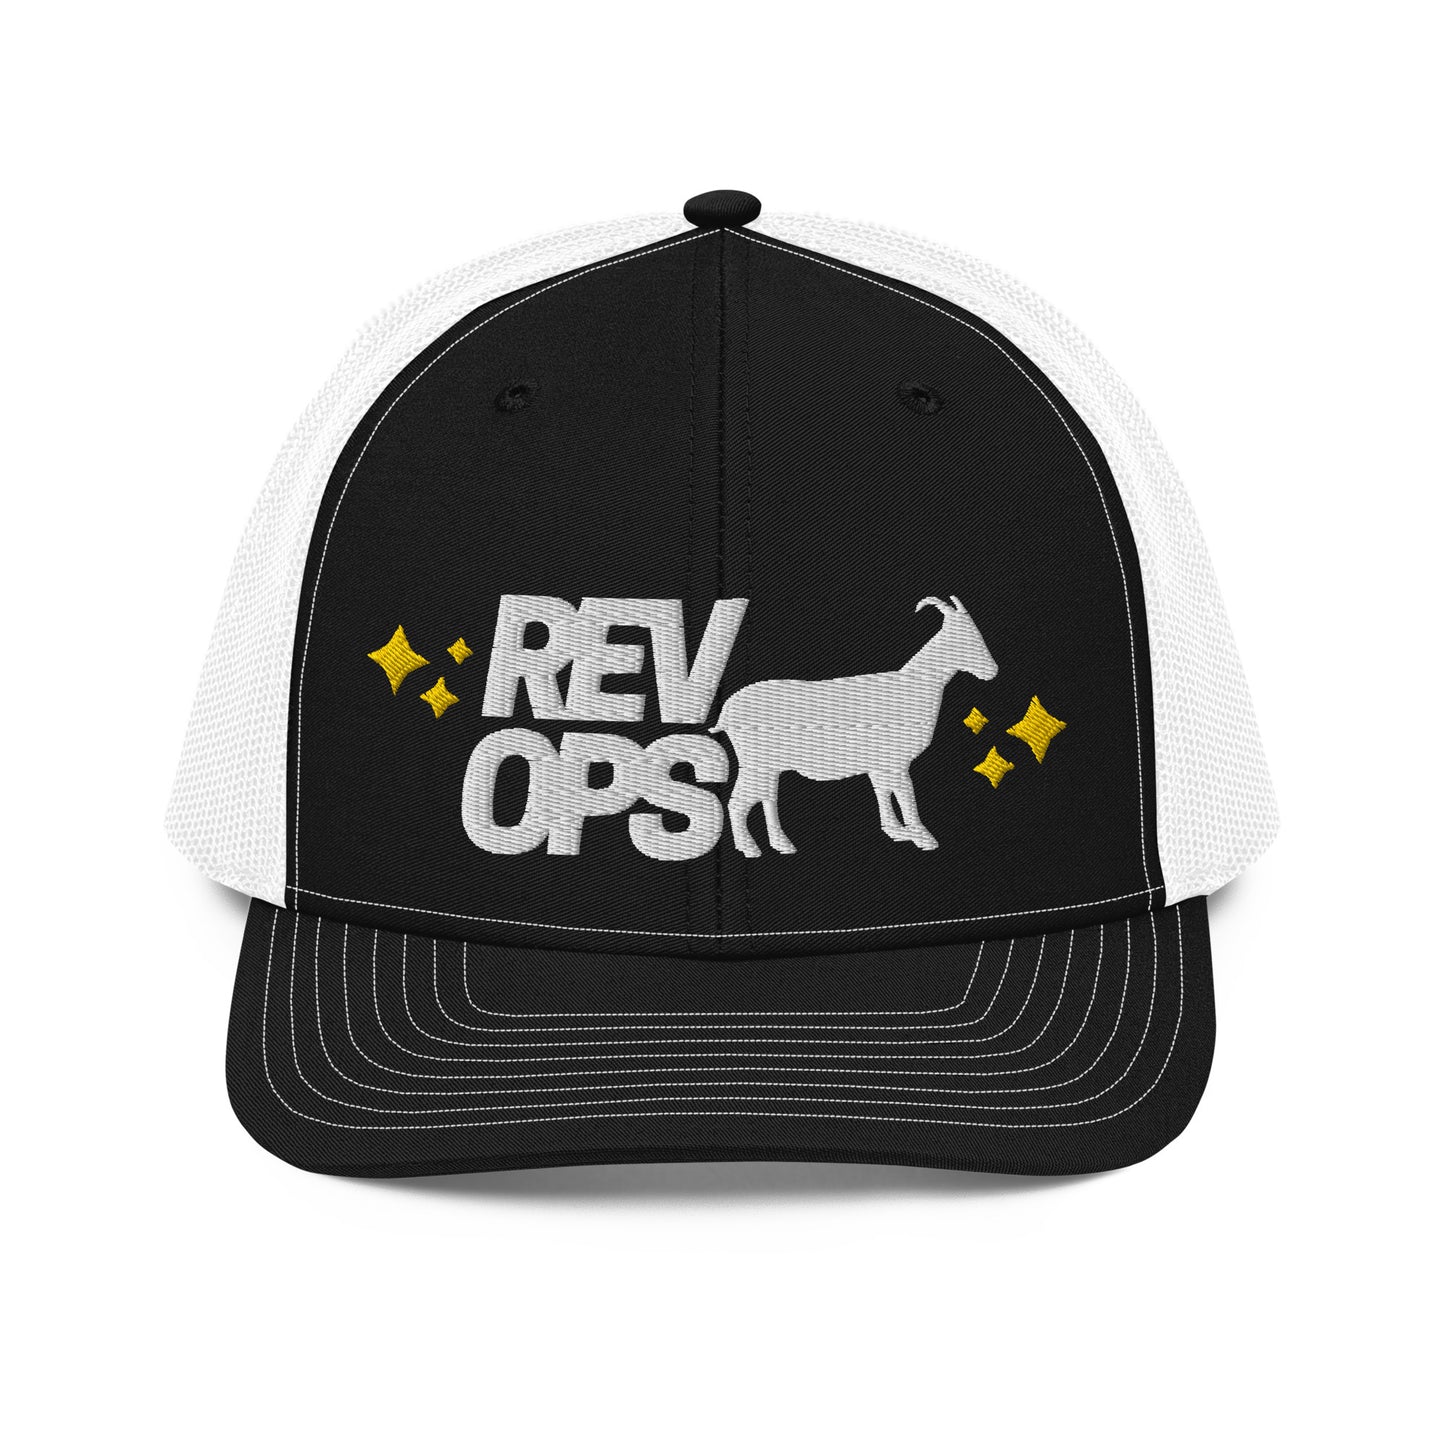 Rev Ops GOAT Mesh Trucker Cap